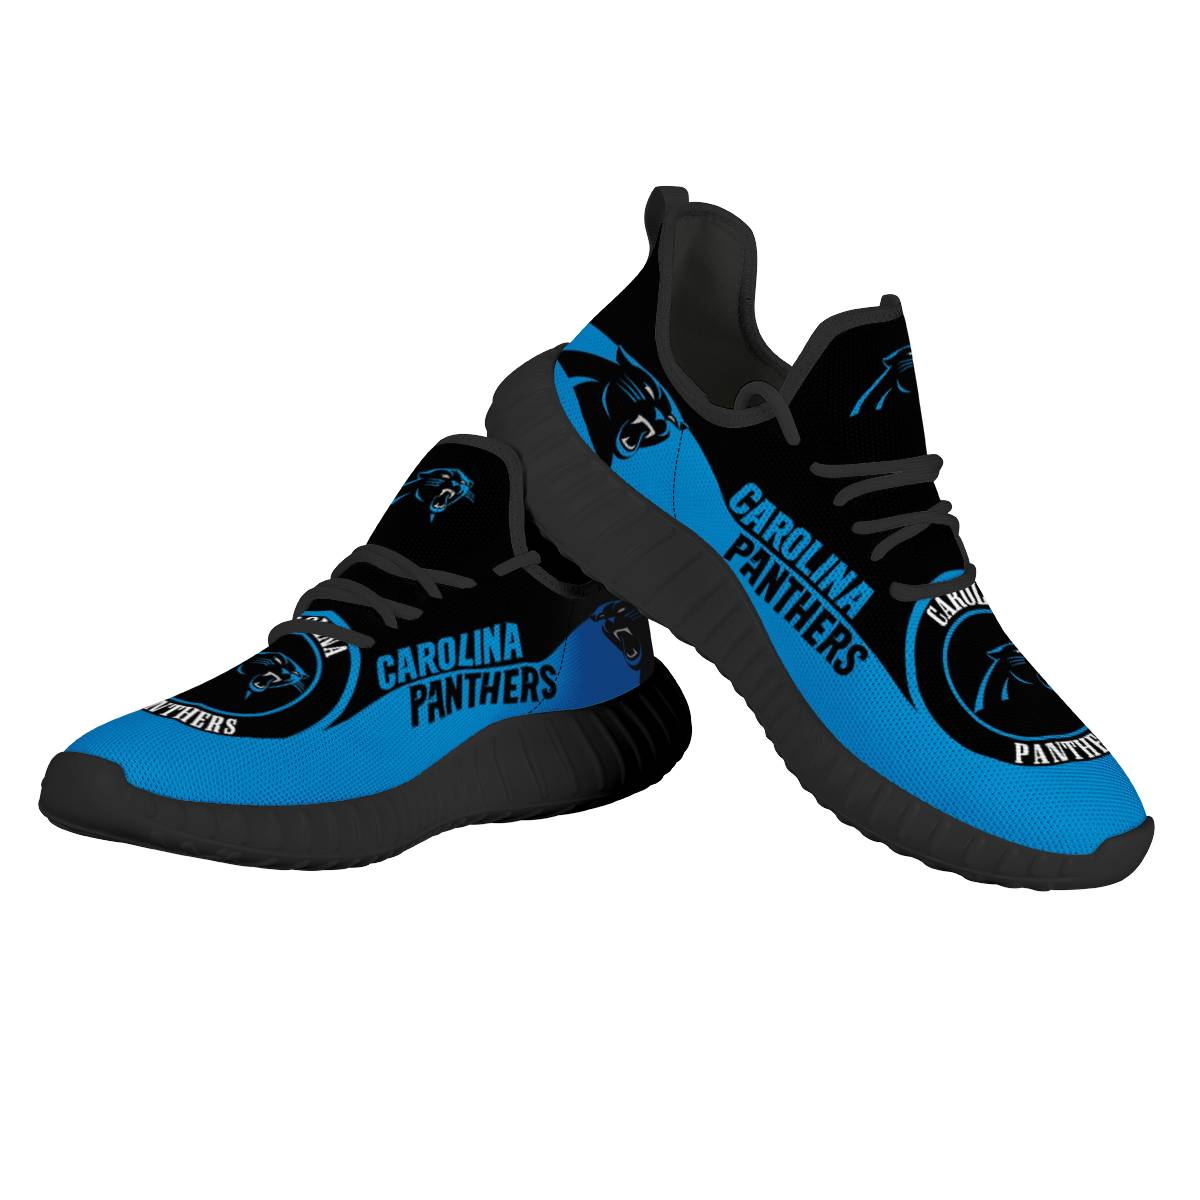 Men's Carolina Panthers Mesh Knit Sneakers/Shoes 003